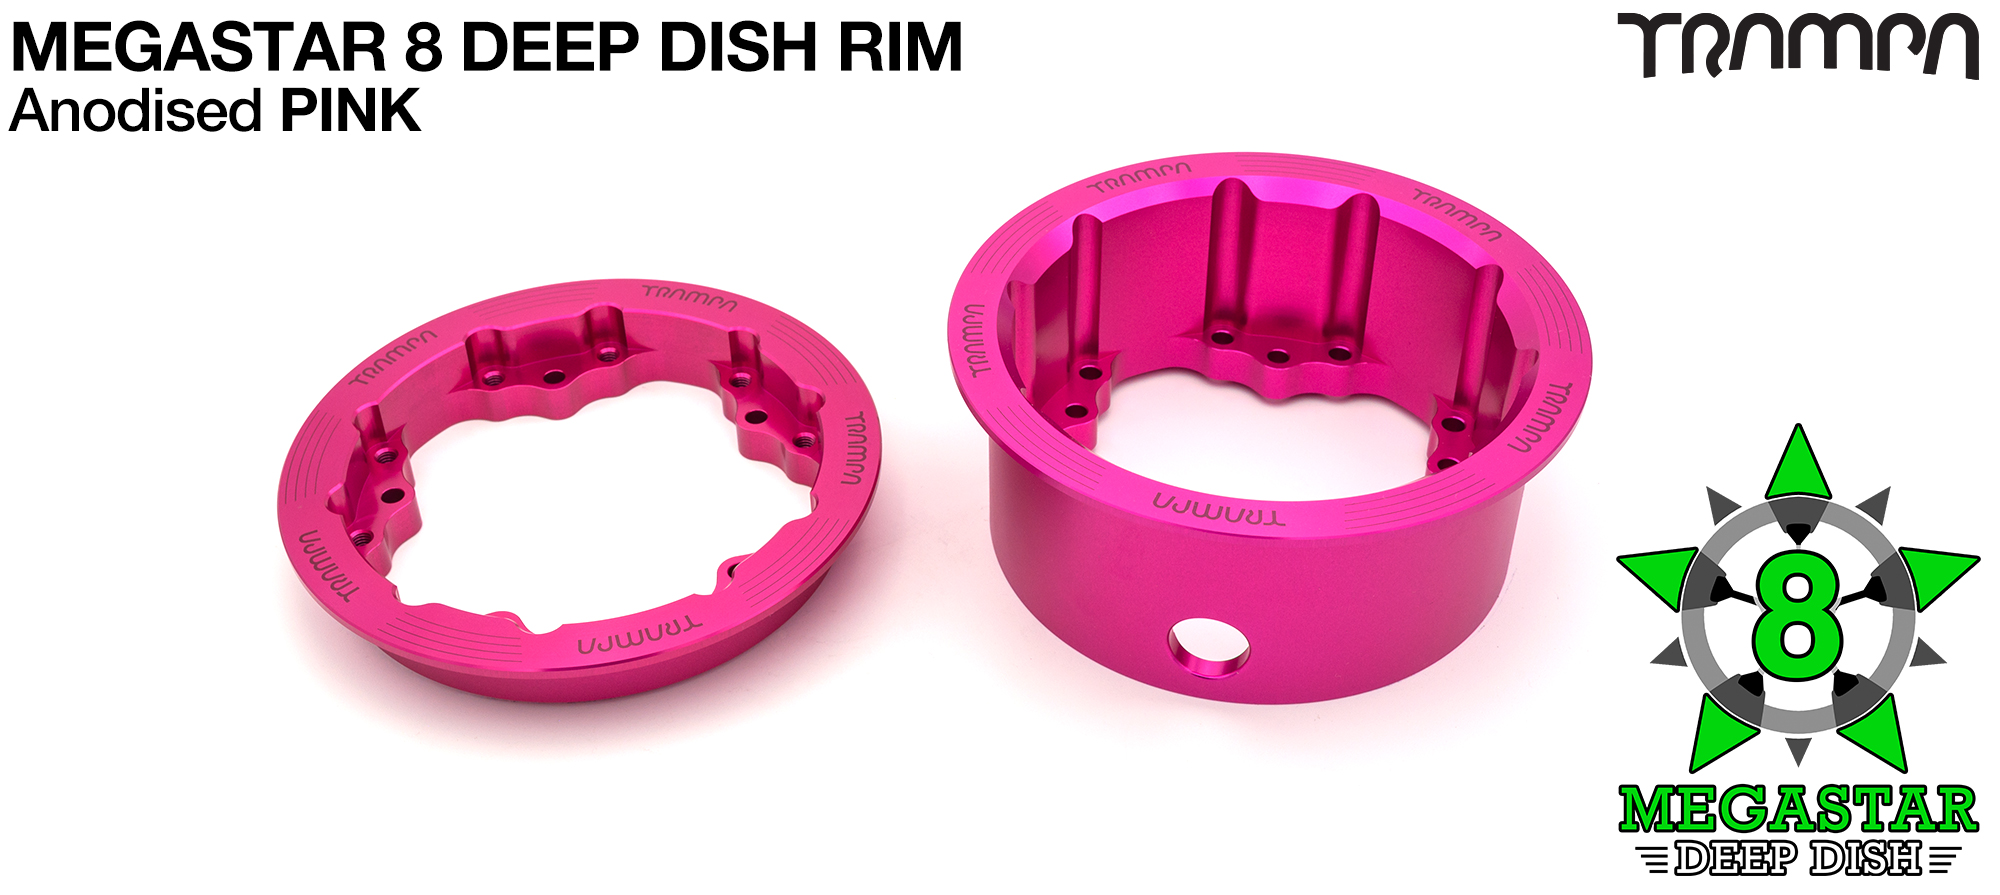 DEEP-DISH MEGASTAR Rims - PINK 